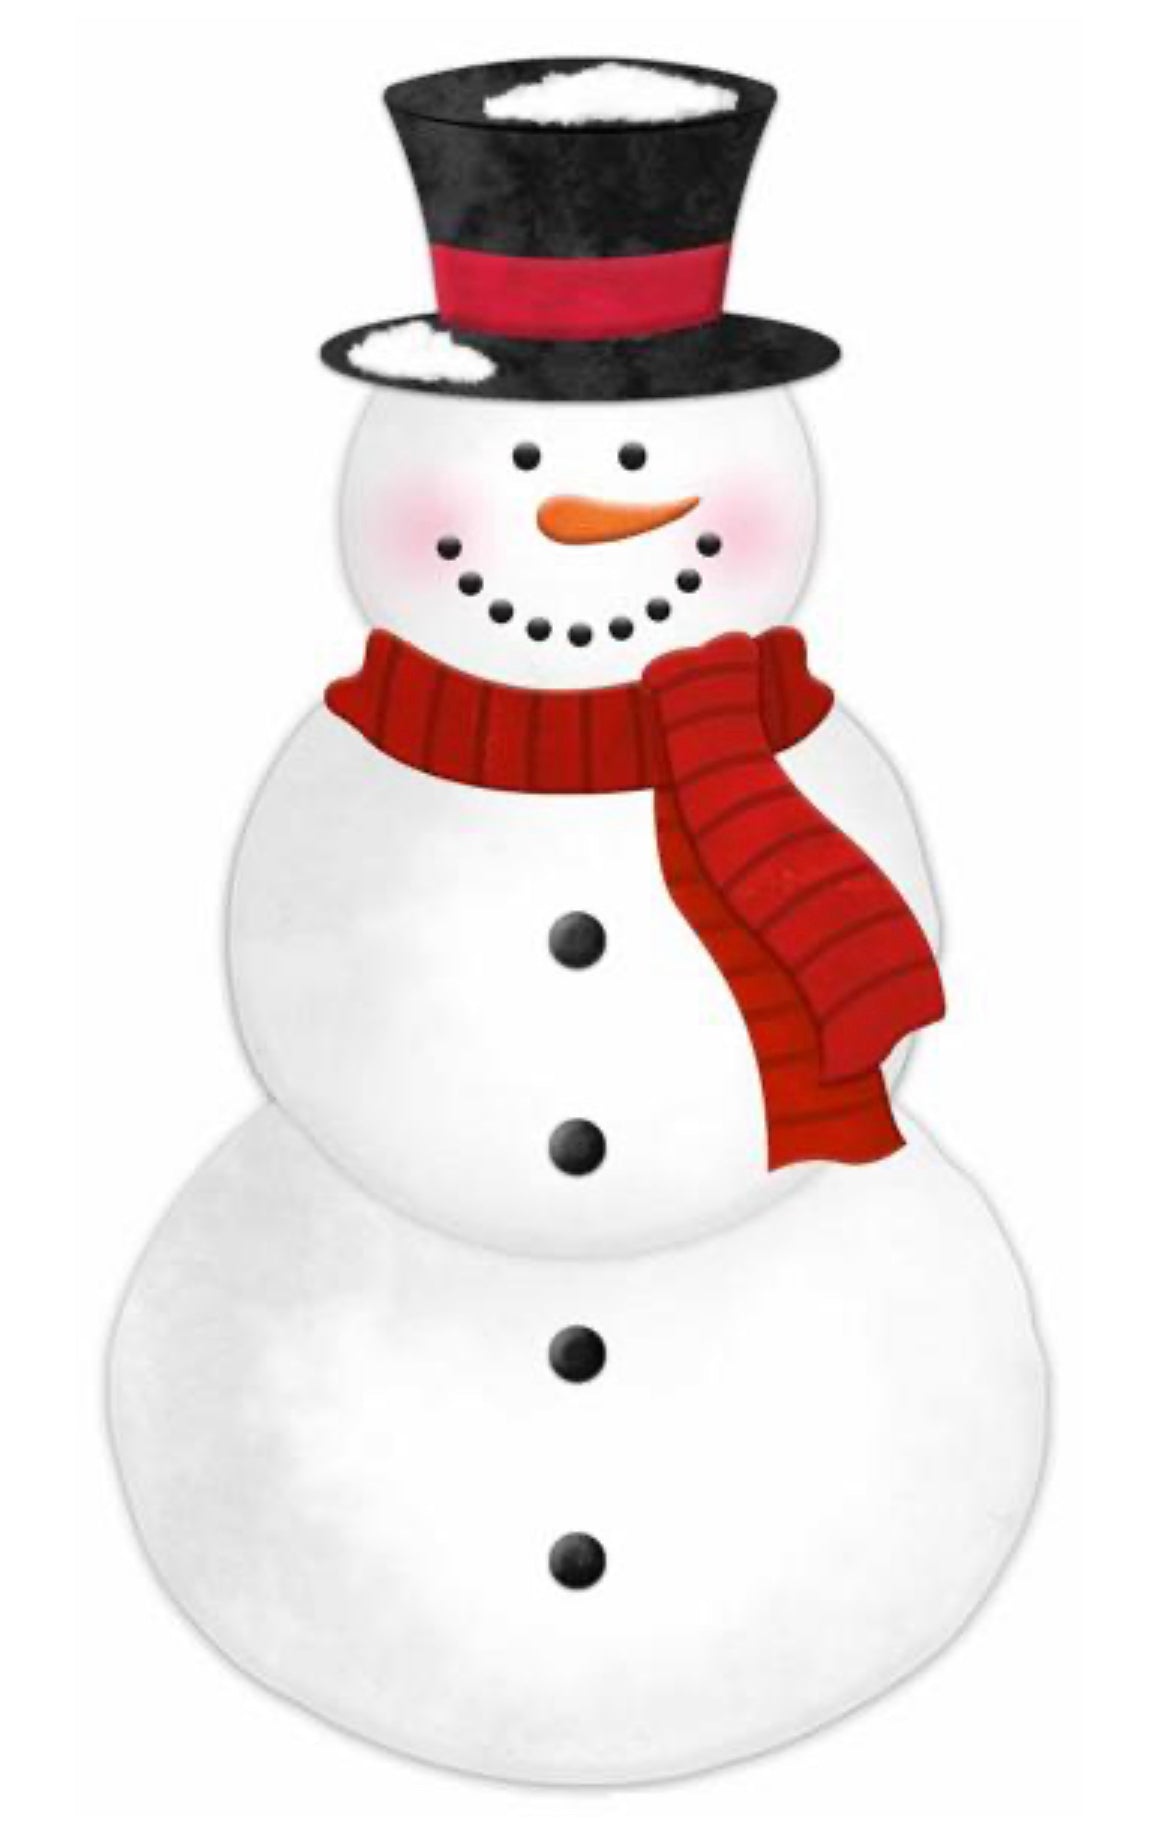 Embossed metal, winter snowman sign - Greenery MarketSeasonal & Holiday DecorationsMD0604